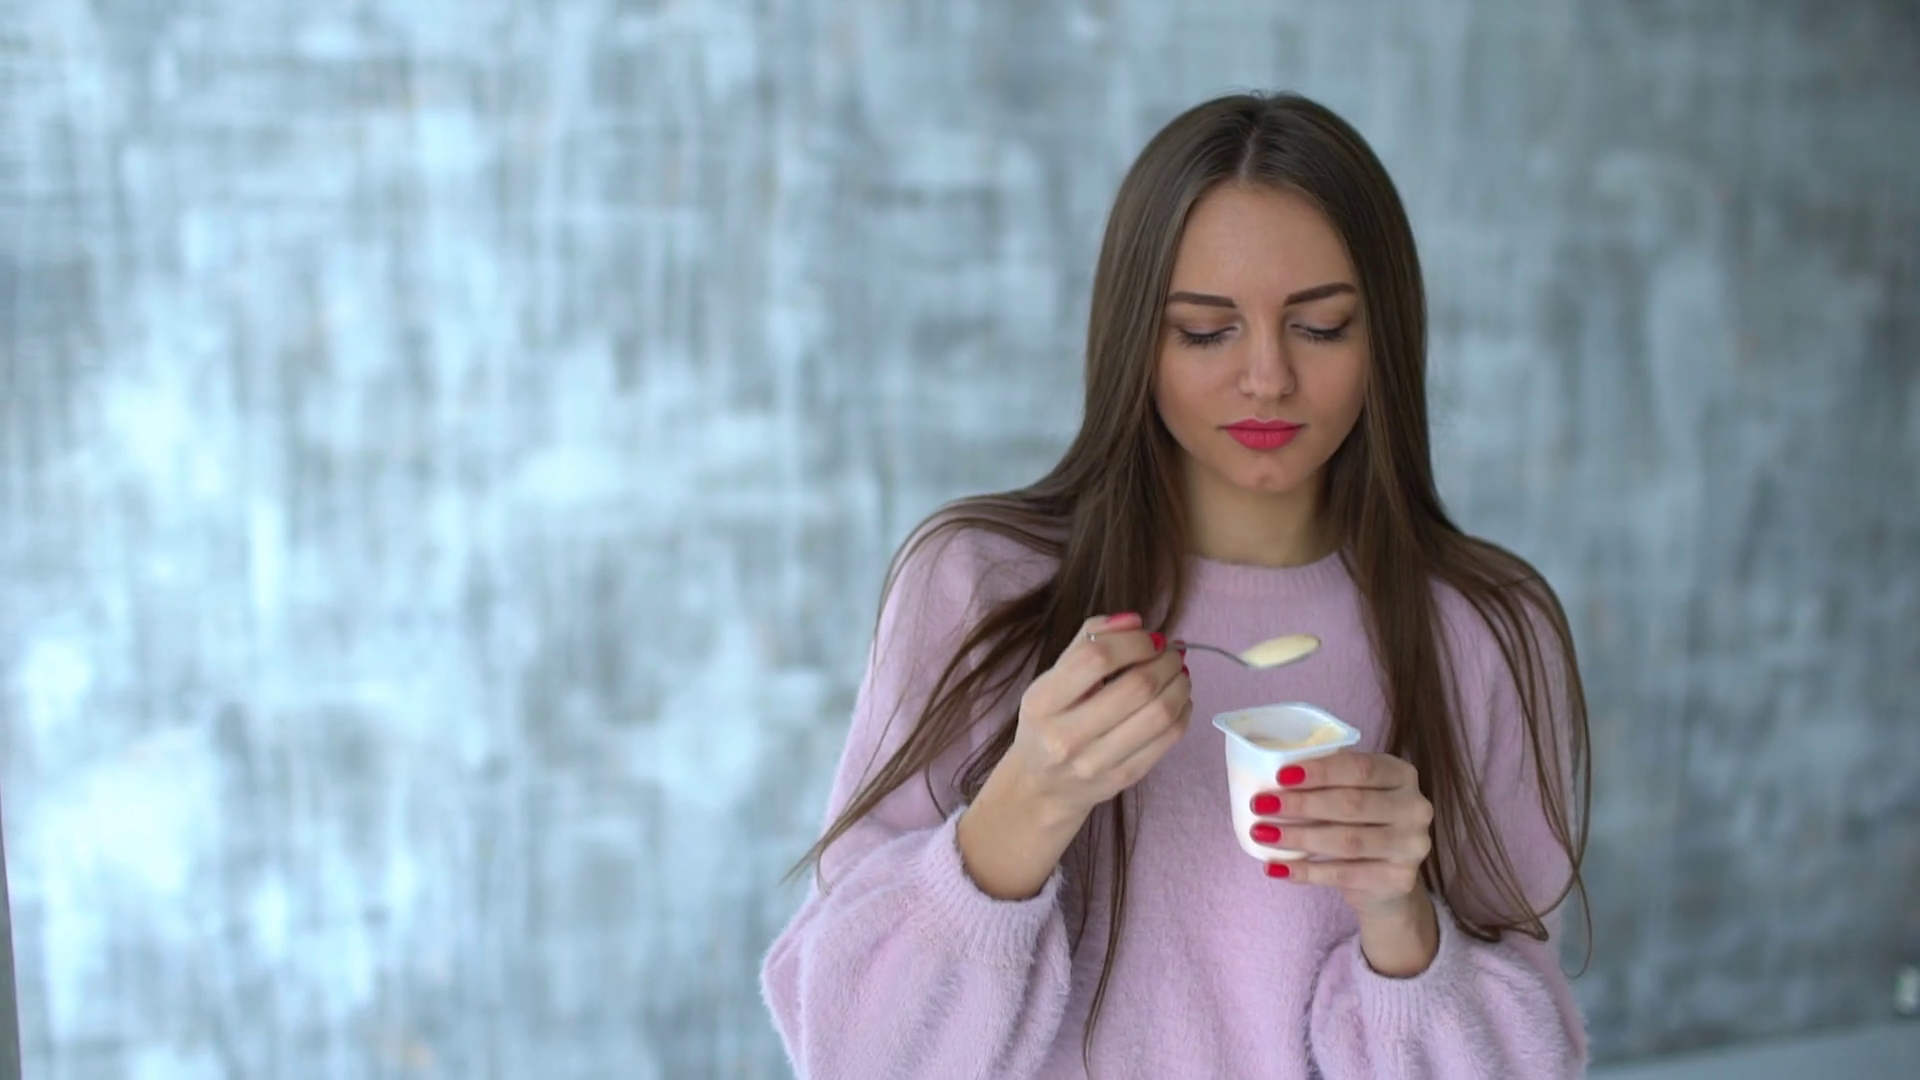 woman eating yogurt. slow-motion. pretty young woman eats a yogurt ...